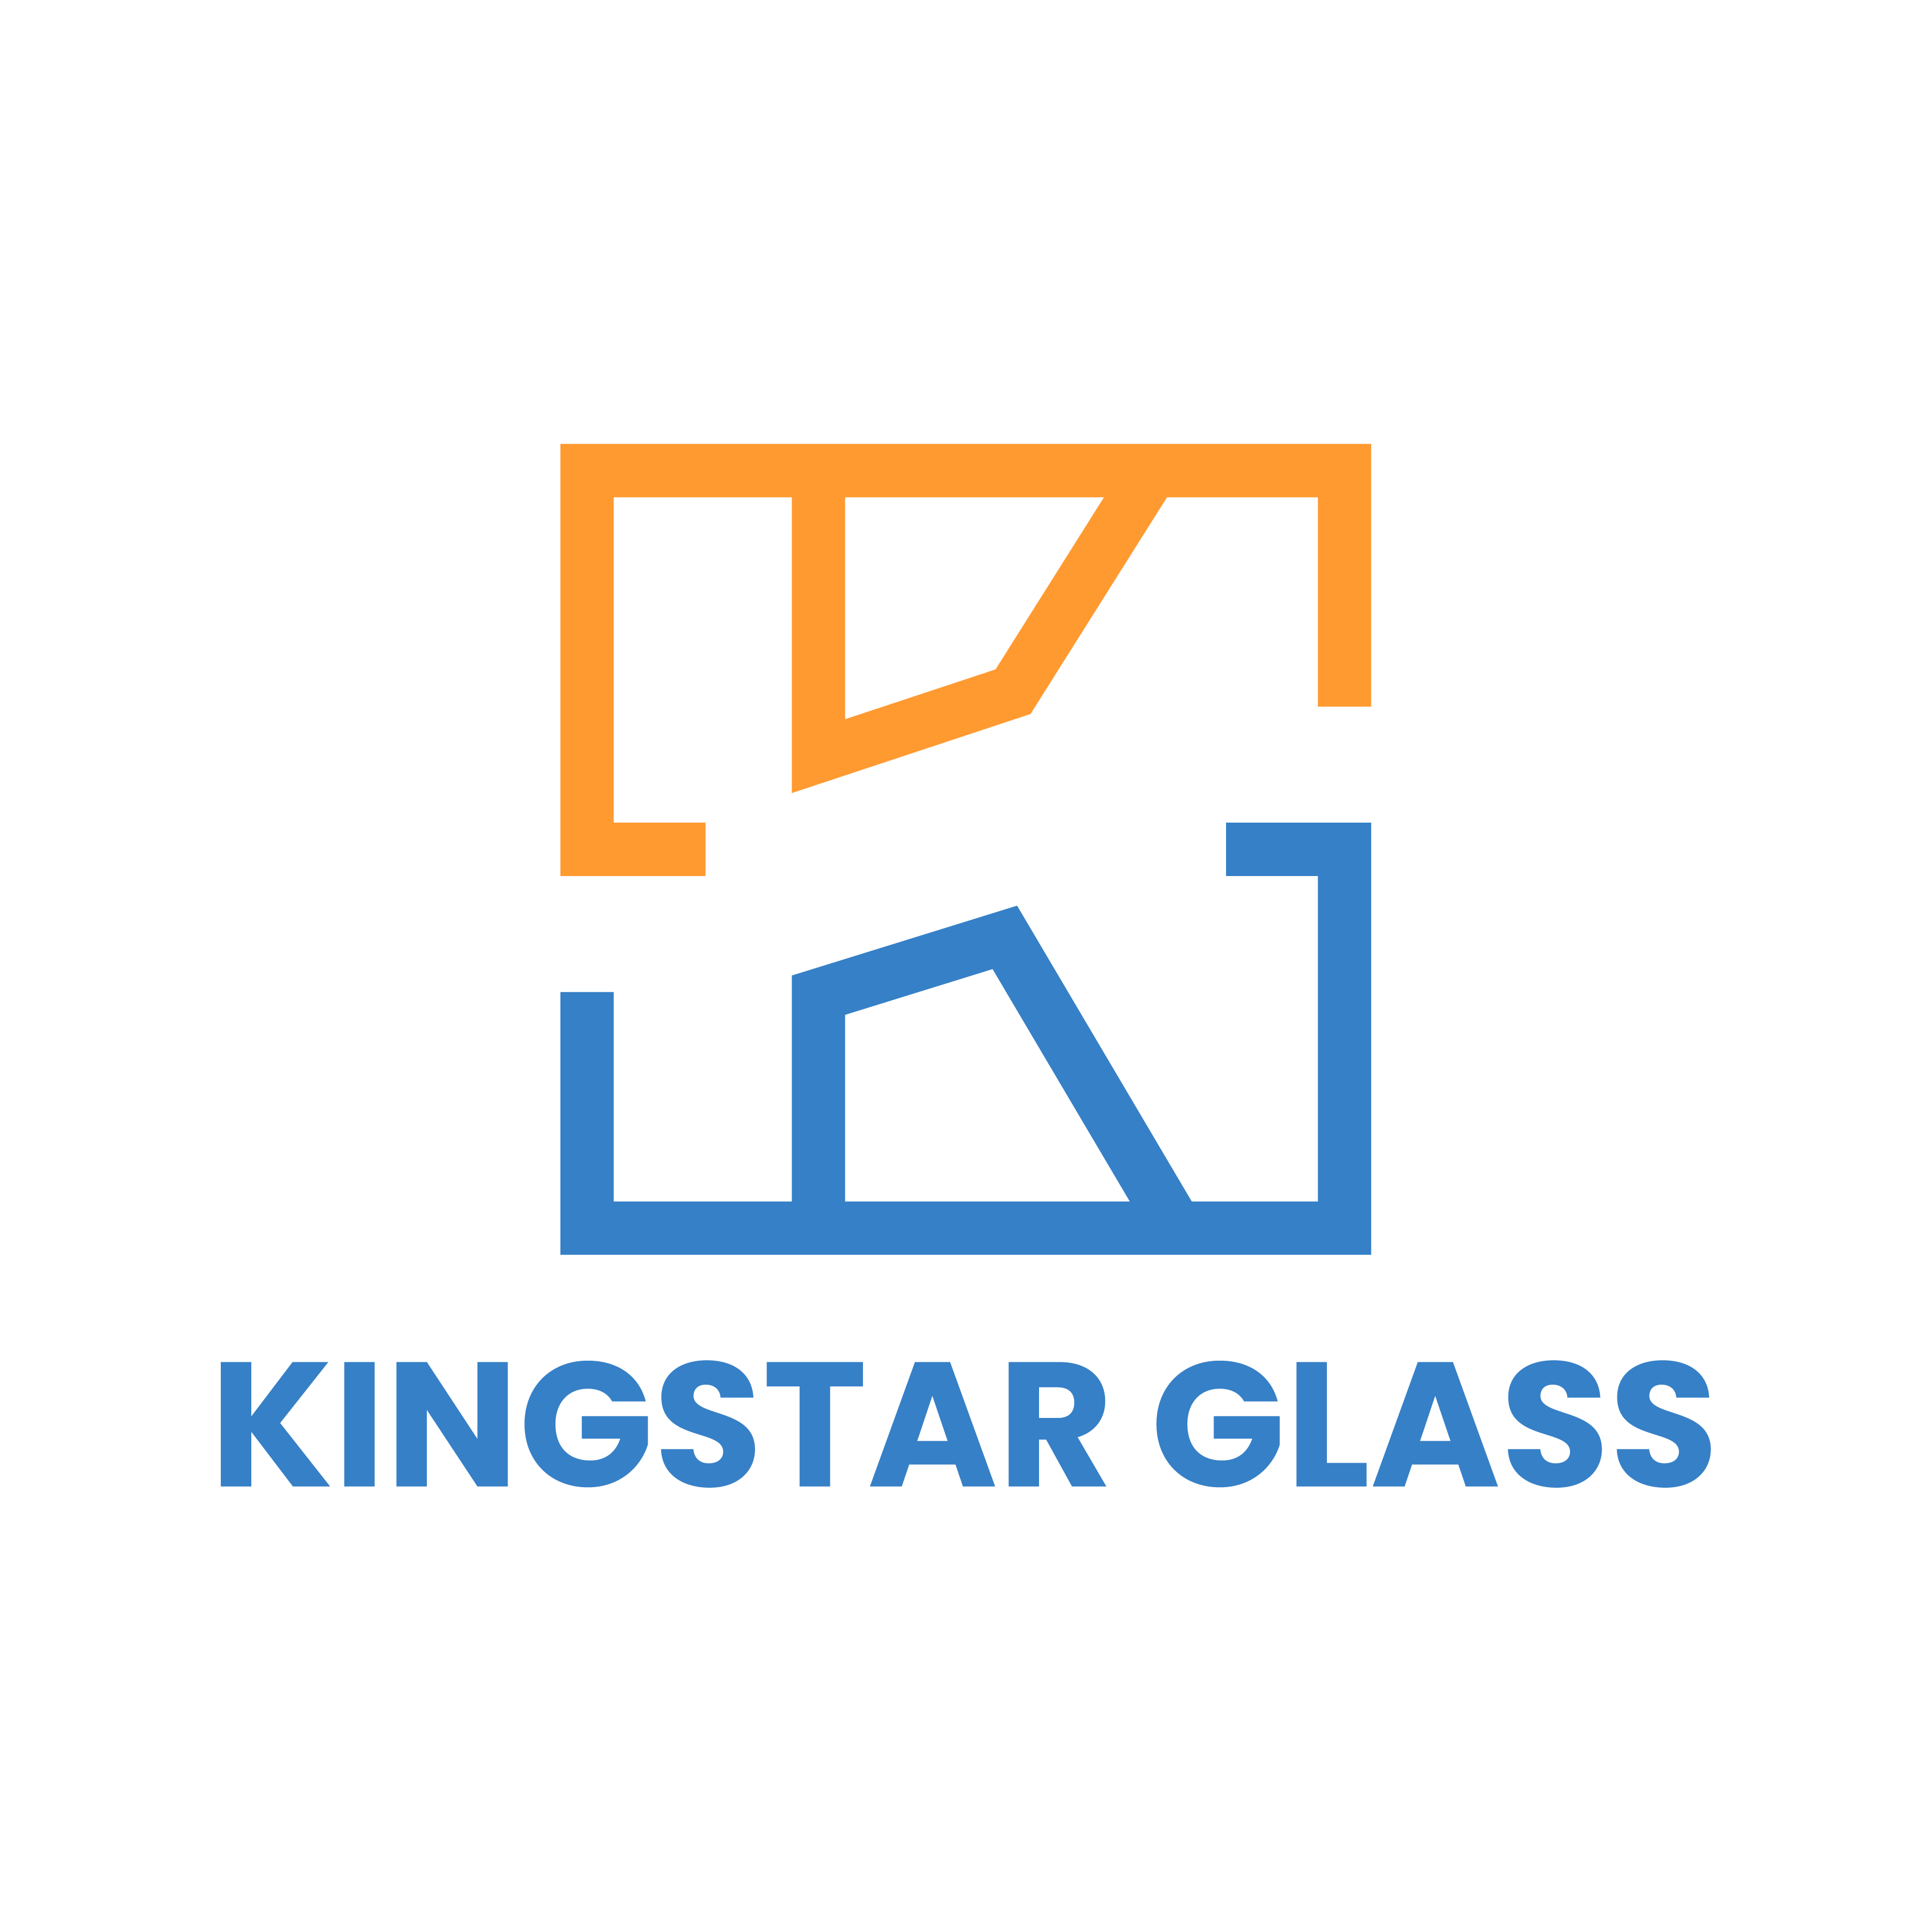 QINGDAO KINGSTAR GLASS CO., LTD.